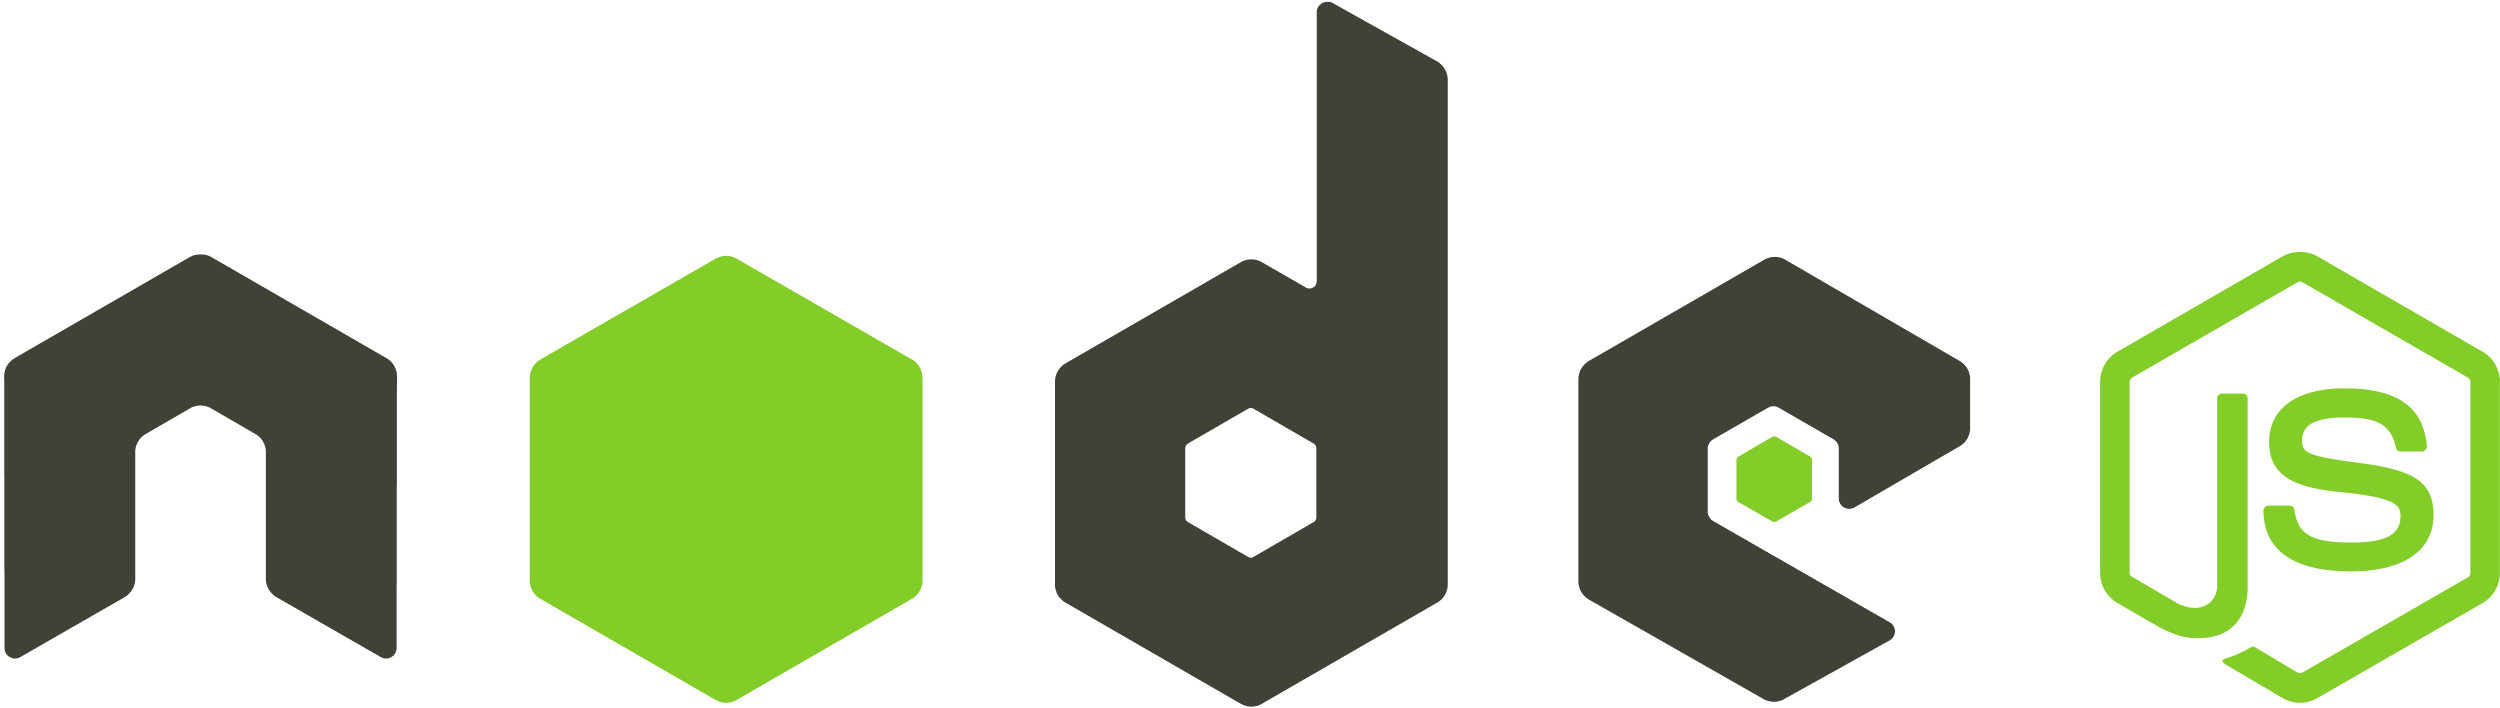 Hire Nodejs Developers | CodeStore